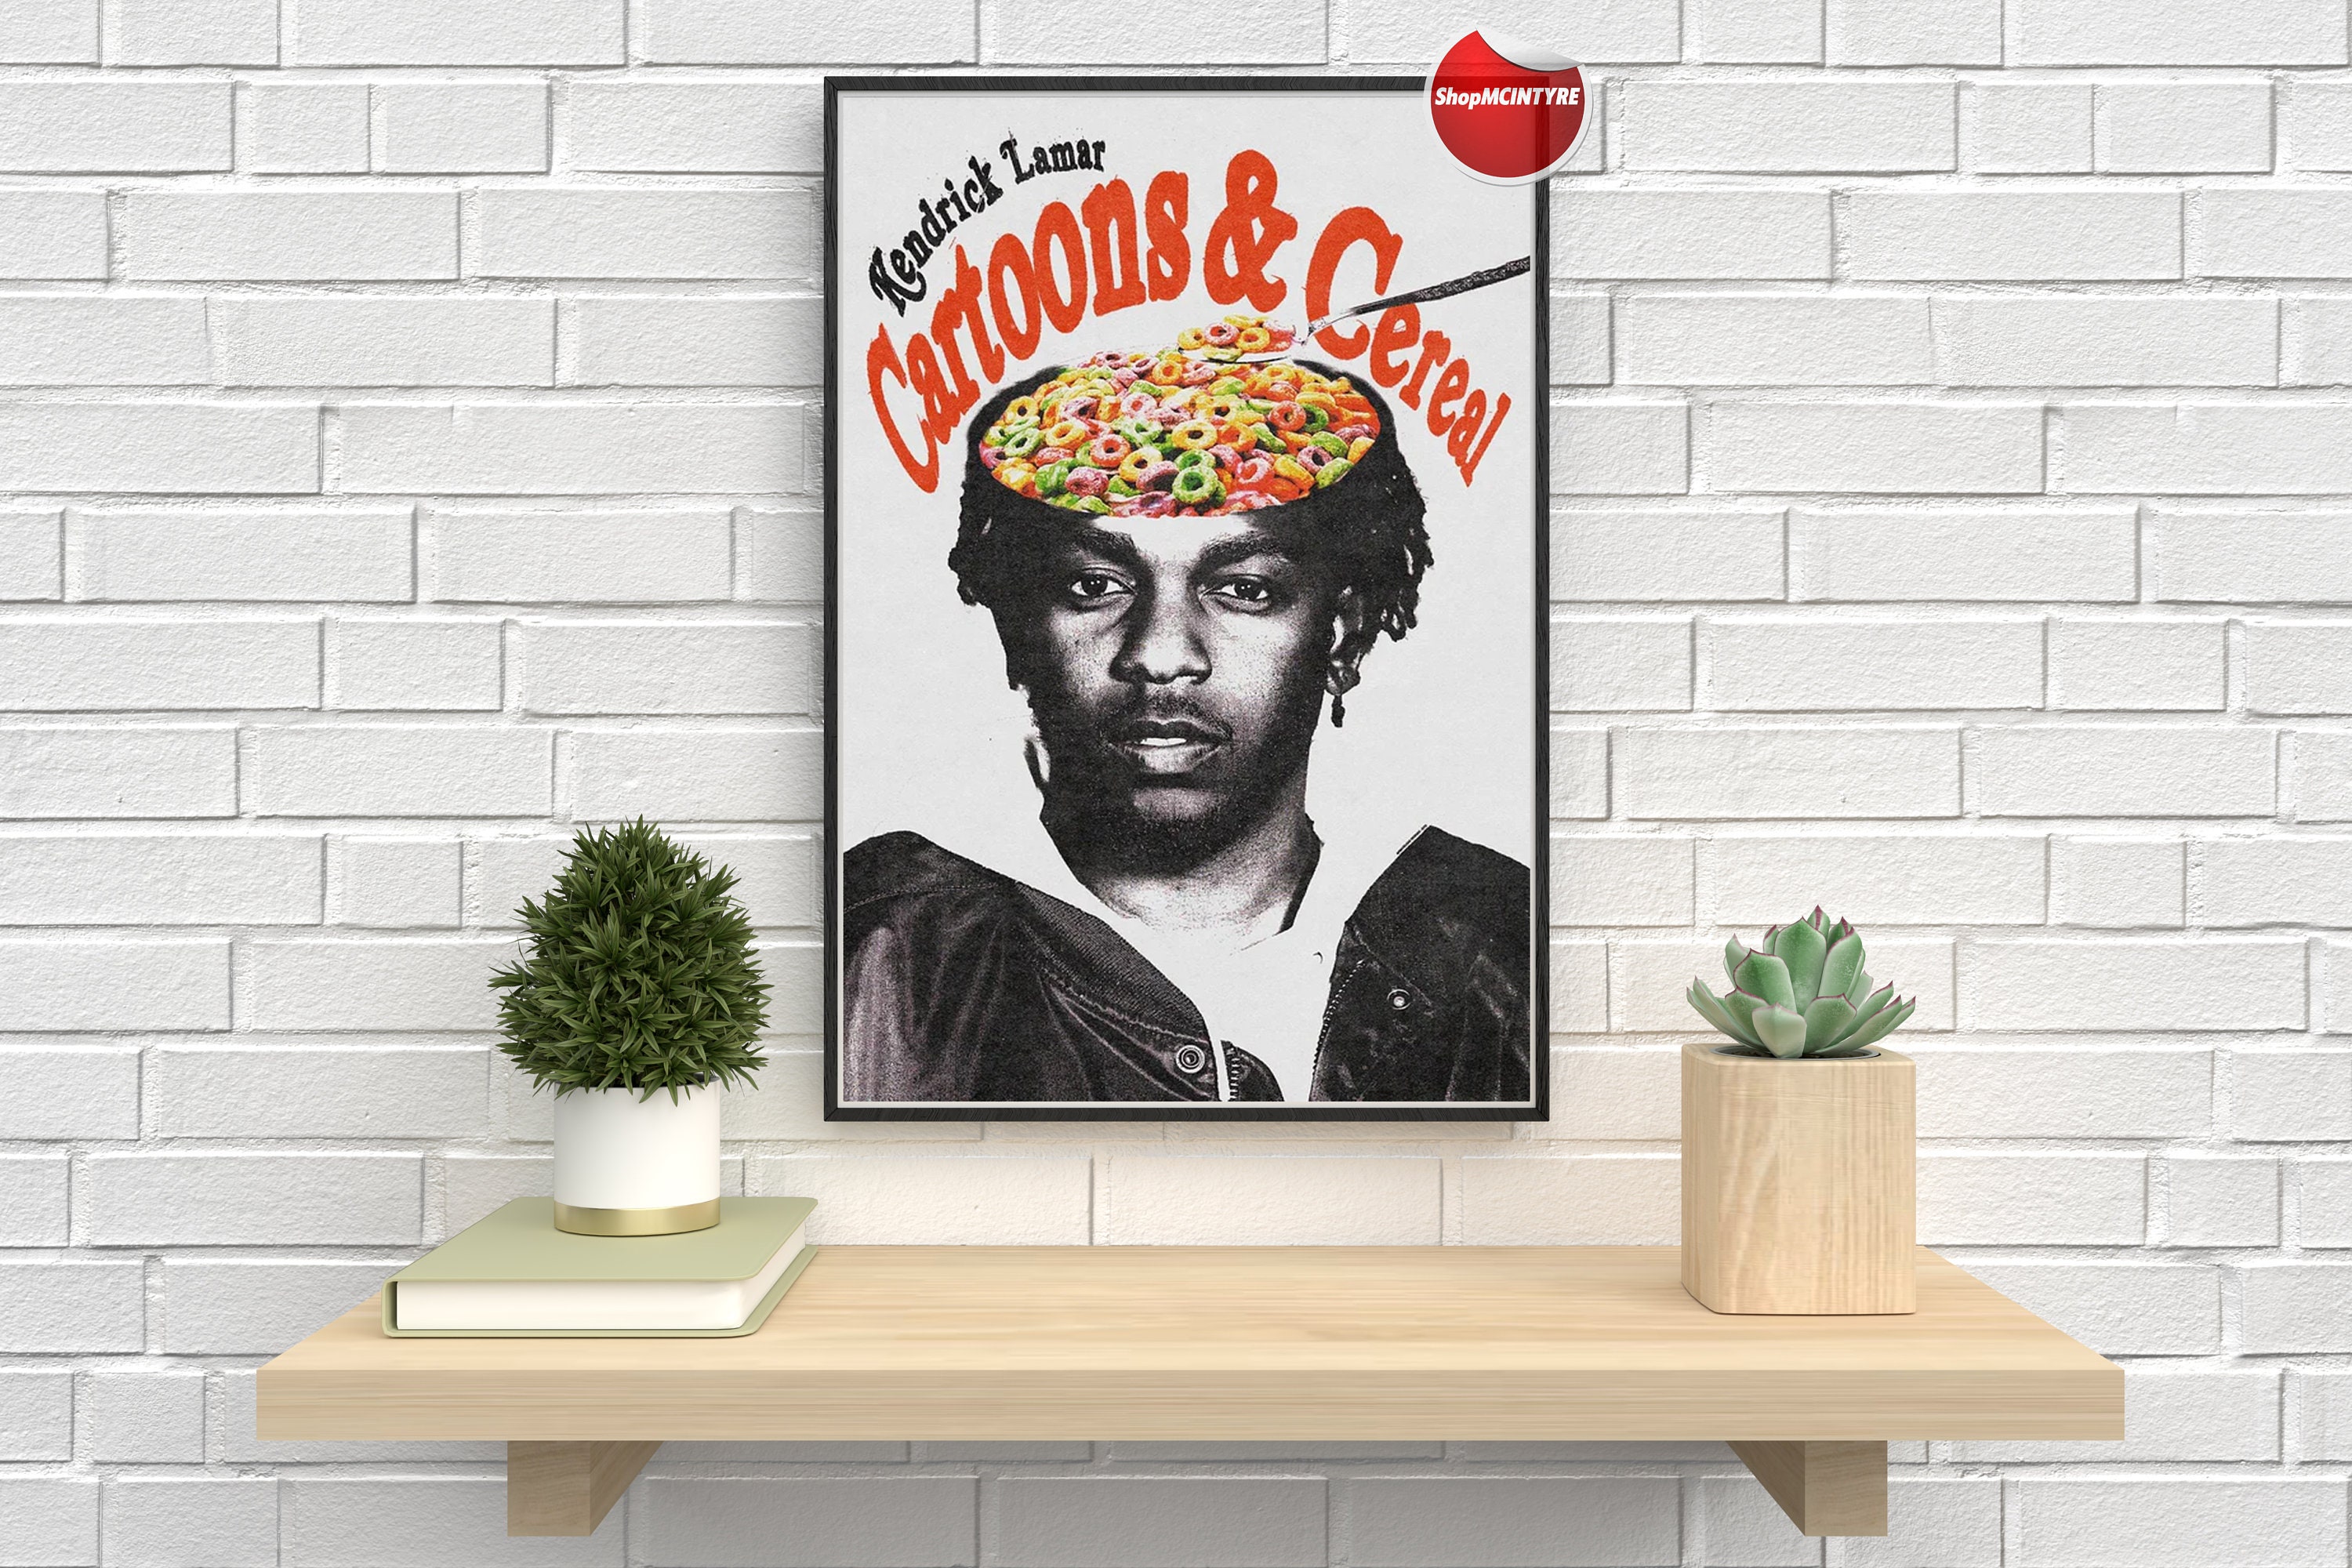 K Lamar 'Cartoons and Cereal' Poster - Music Album Cover Art Print Posters